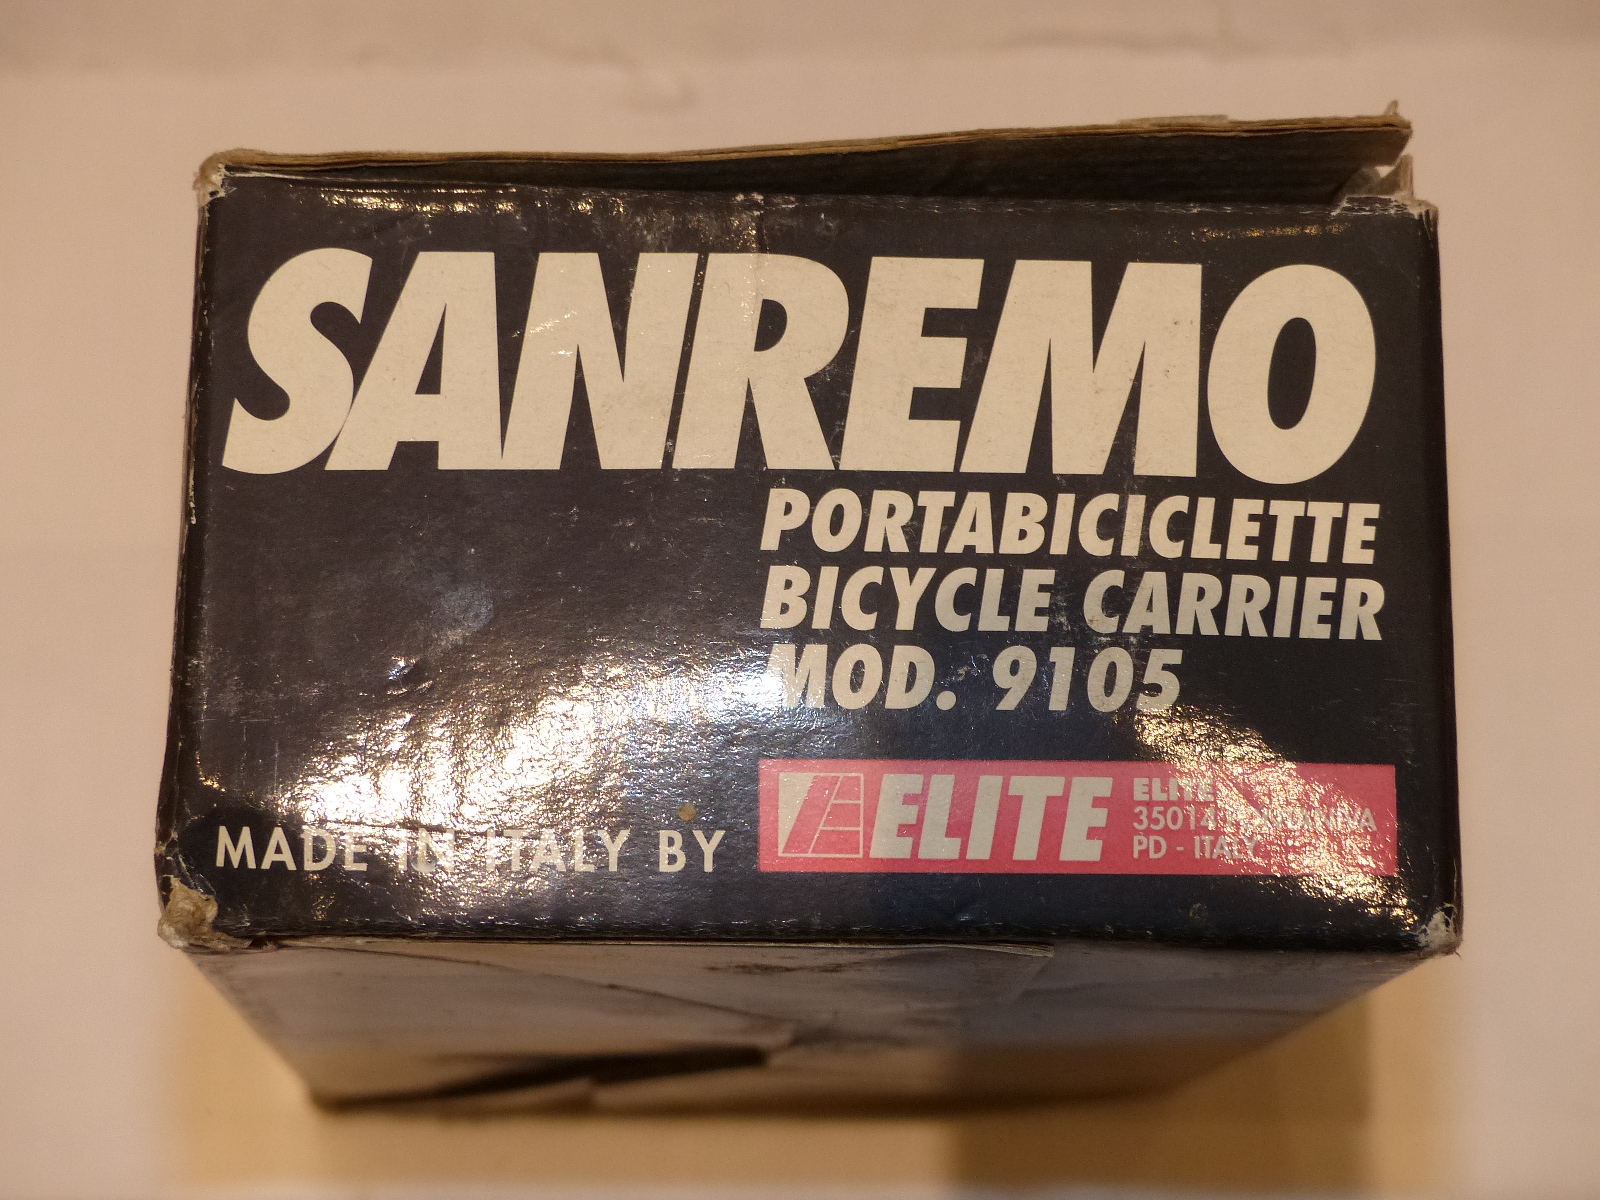 New/old stock: SanRemo Elite roof rack road bike carrier (mod 9105)